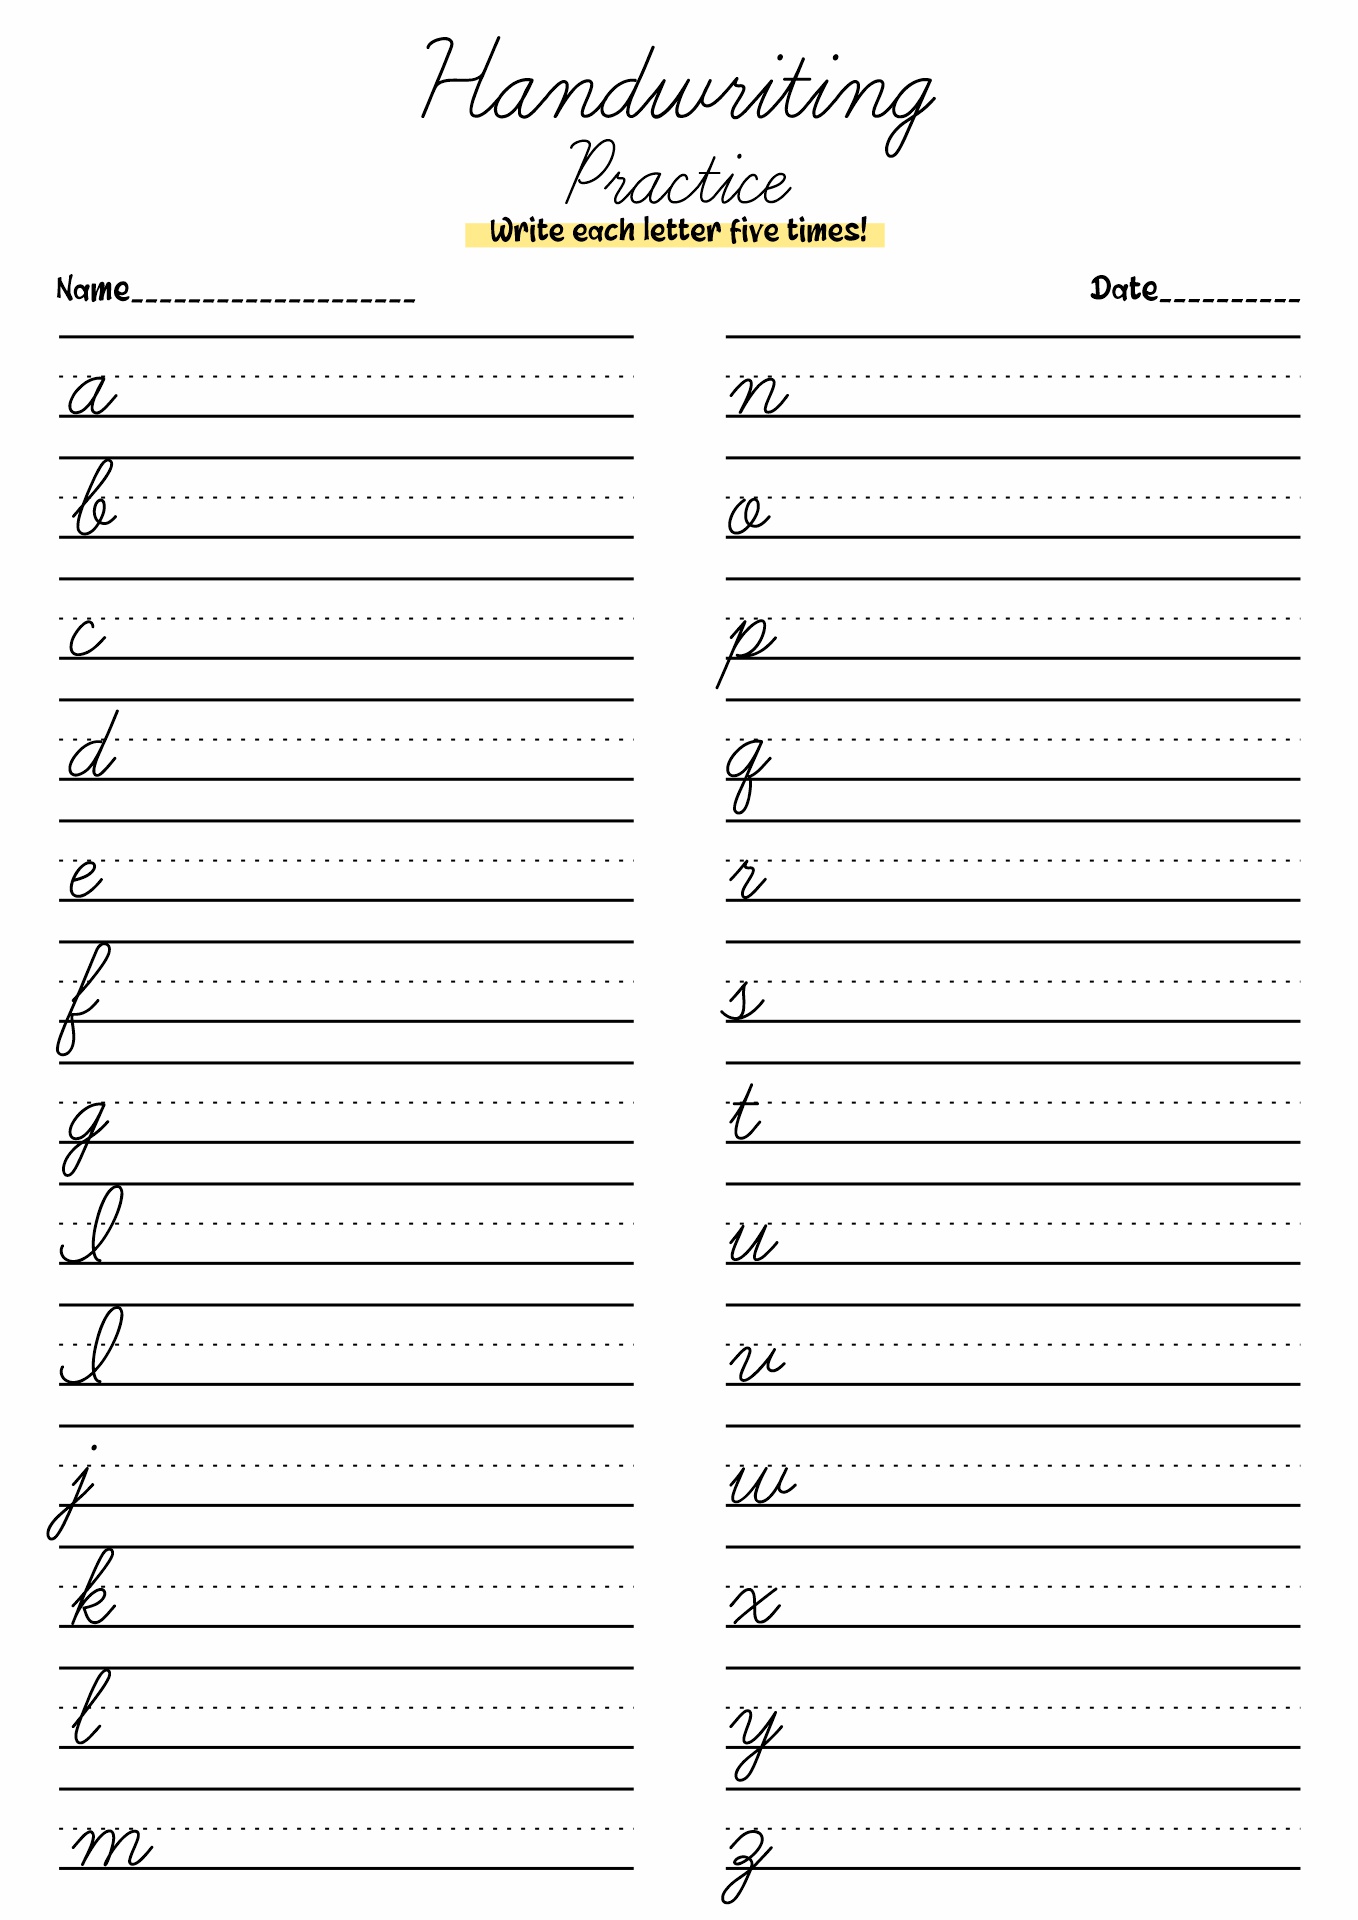 12 Best Images Of Practice Writing Alphabet Letter Worksheets Letter 